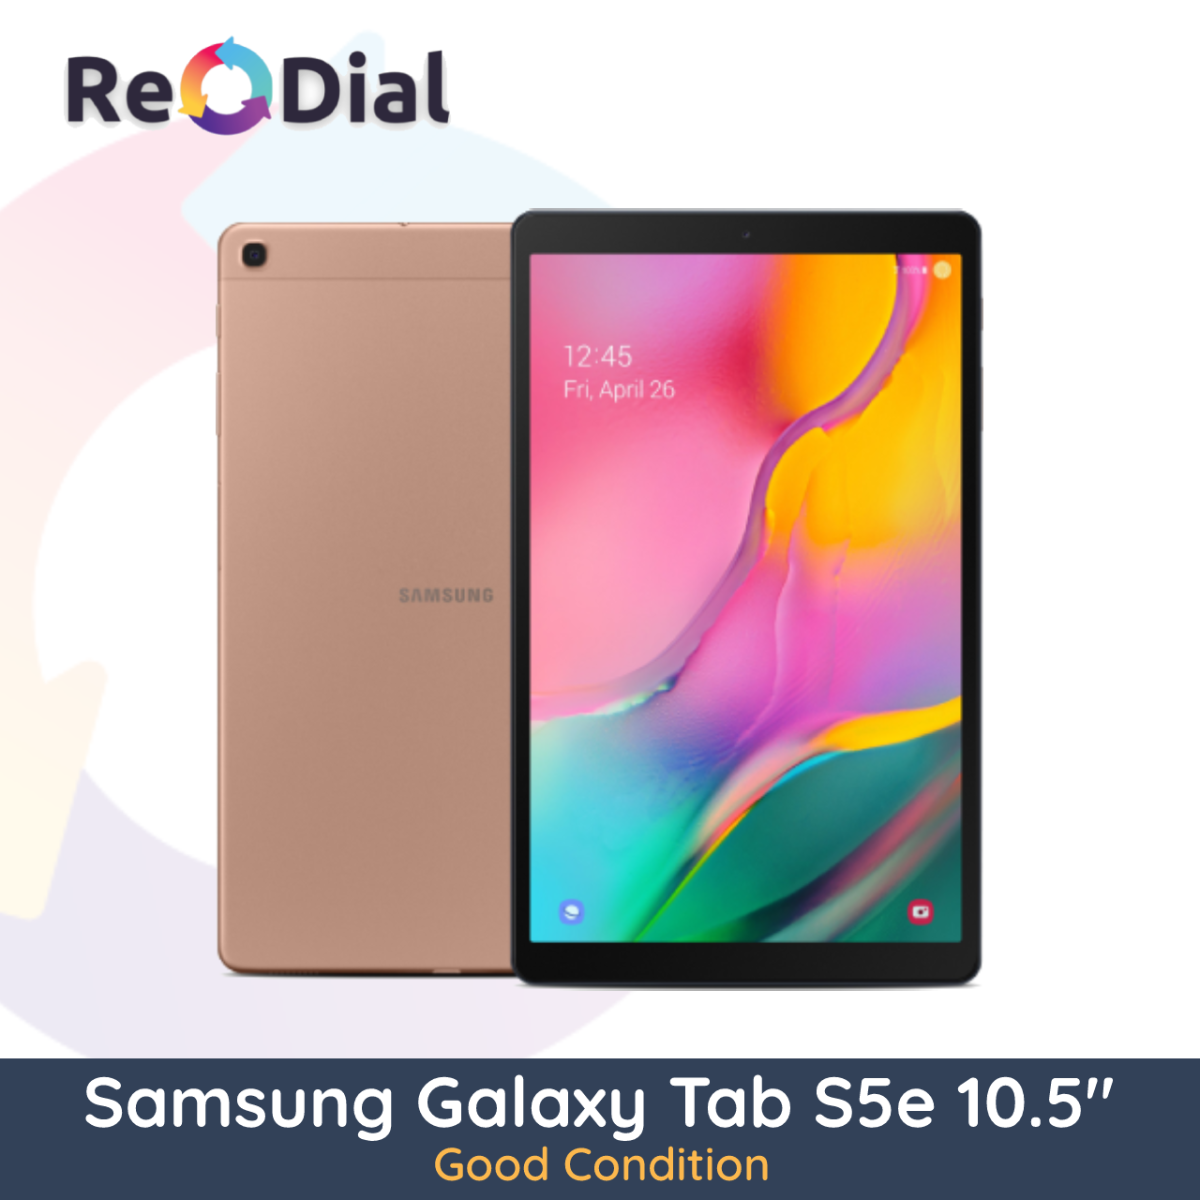 Samsung Galaxy Tab S5e 10.5" (T725 / 2019) WiFi + Cellular - Good Condition